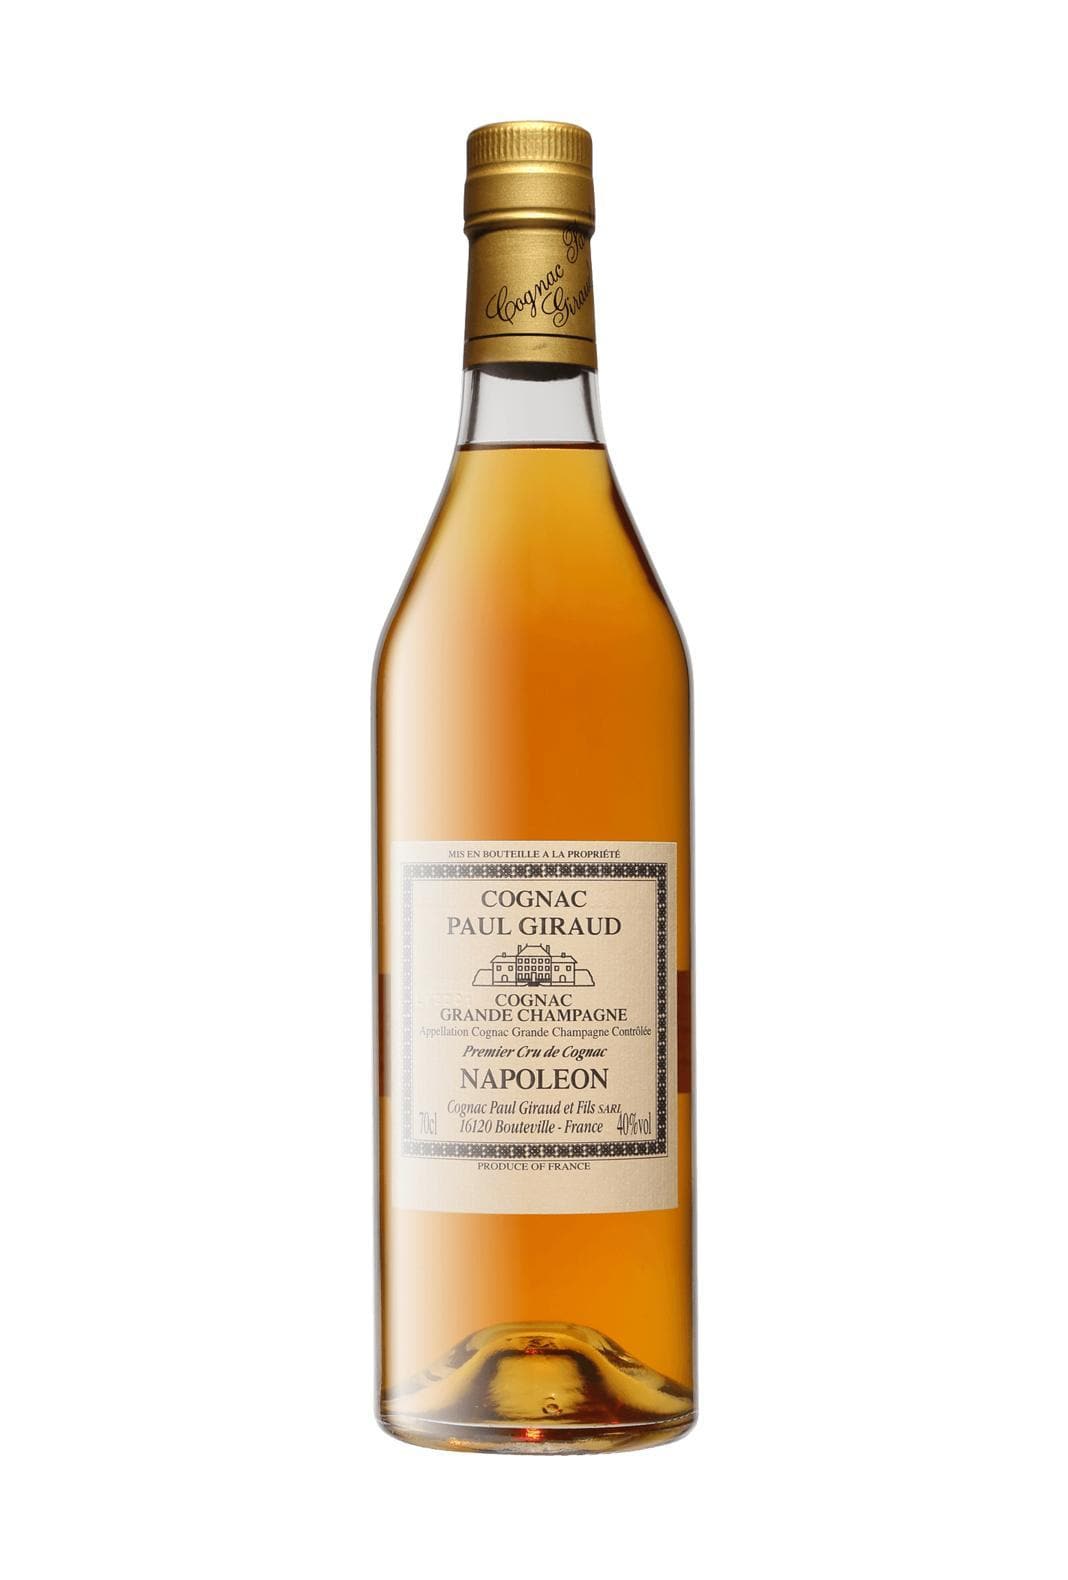 Paul Giraud Cognac Napoleon 15 years Grande Champagne 40% 700ml | Brandy | Shop online at Spirits of France